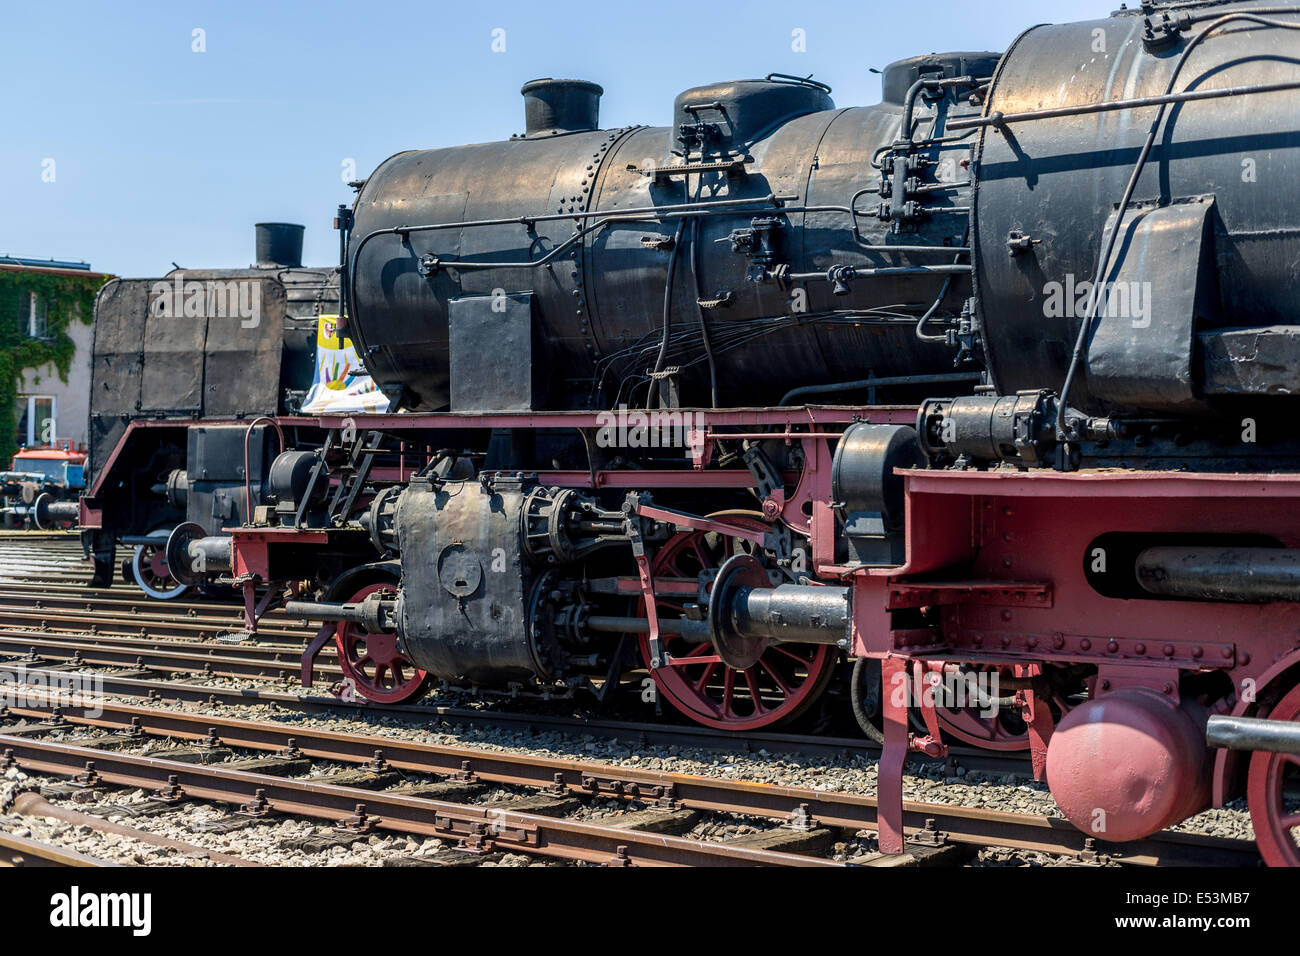 Old steam engine locomotive Stock Photo